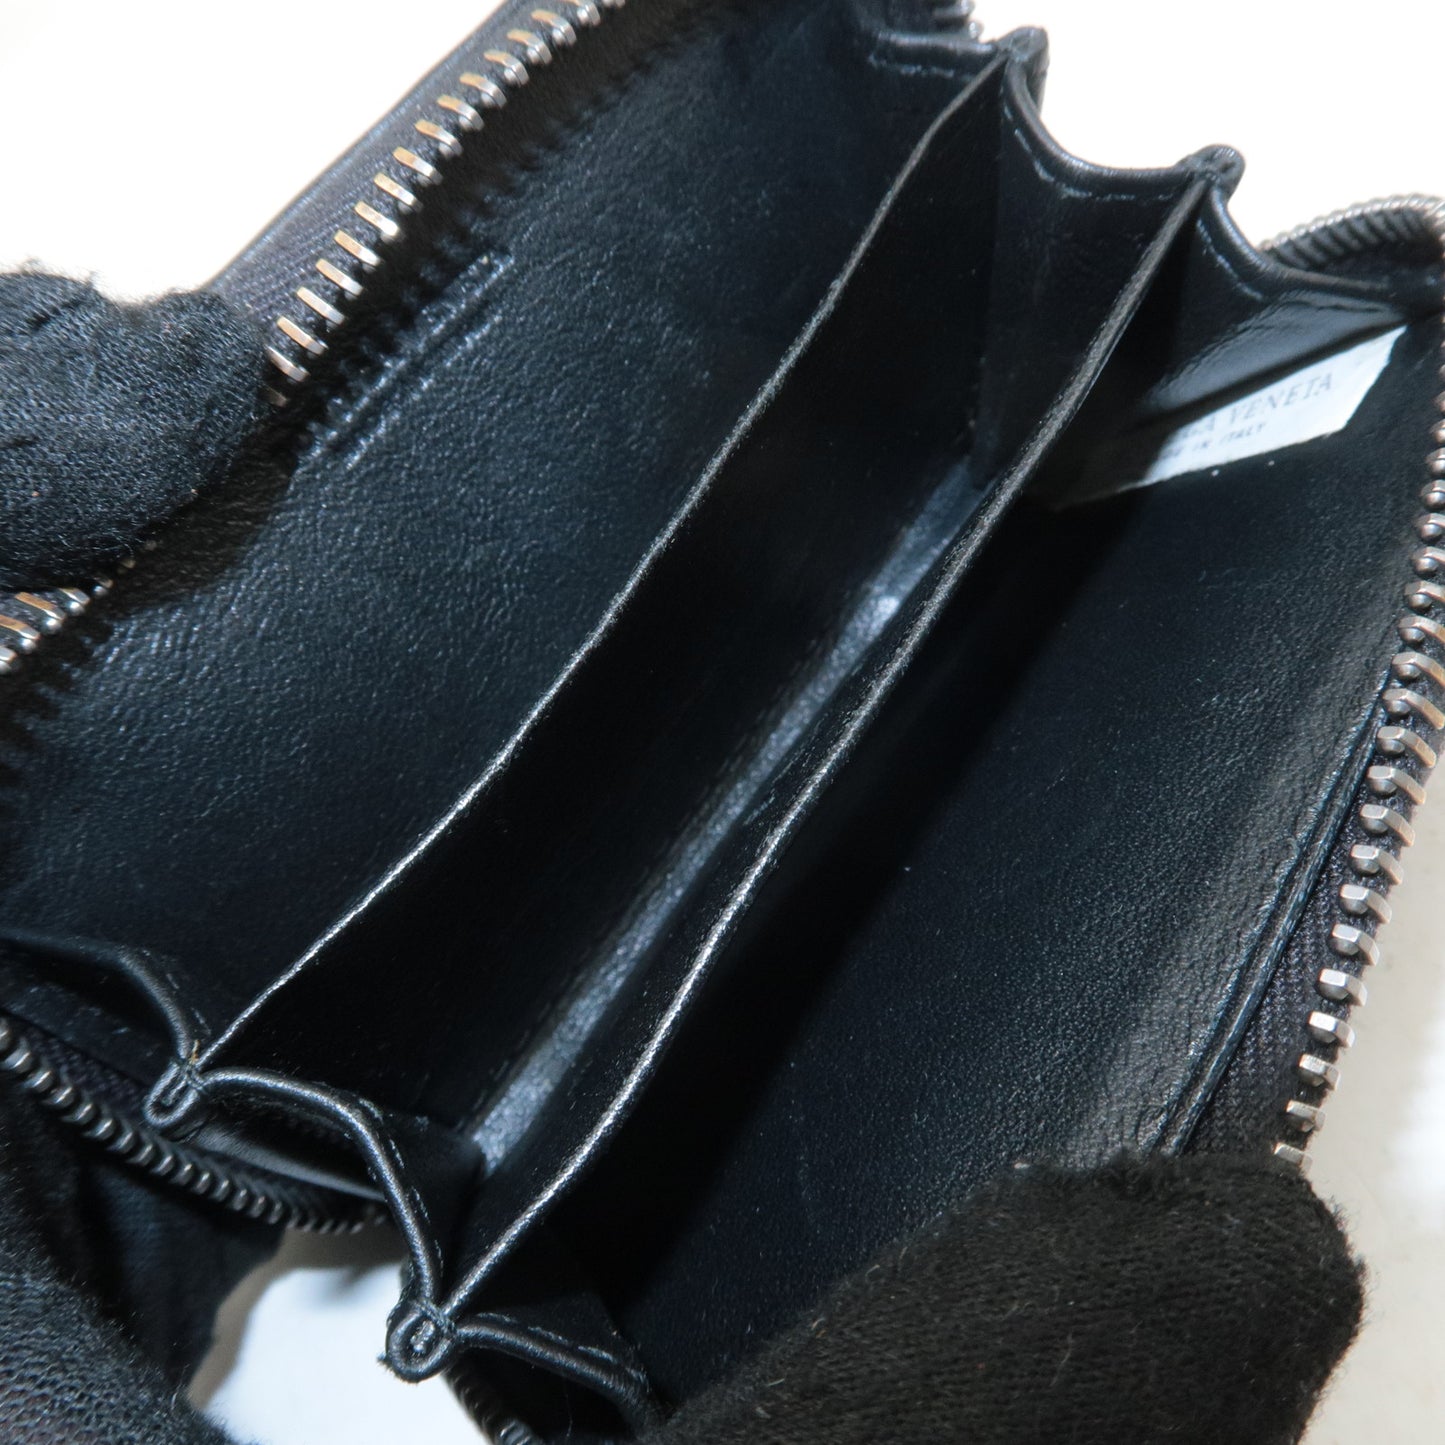 BOTTEGA VENETA Intrecciato Leather Coin Case Black 114075